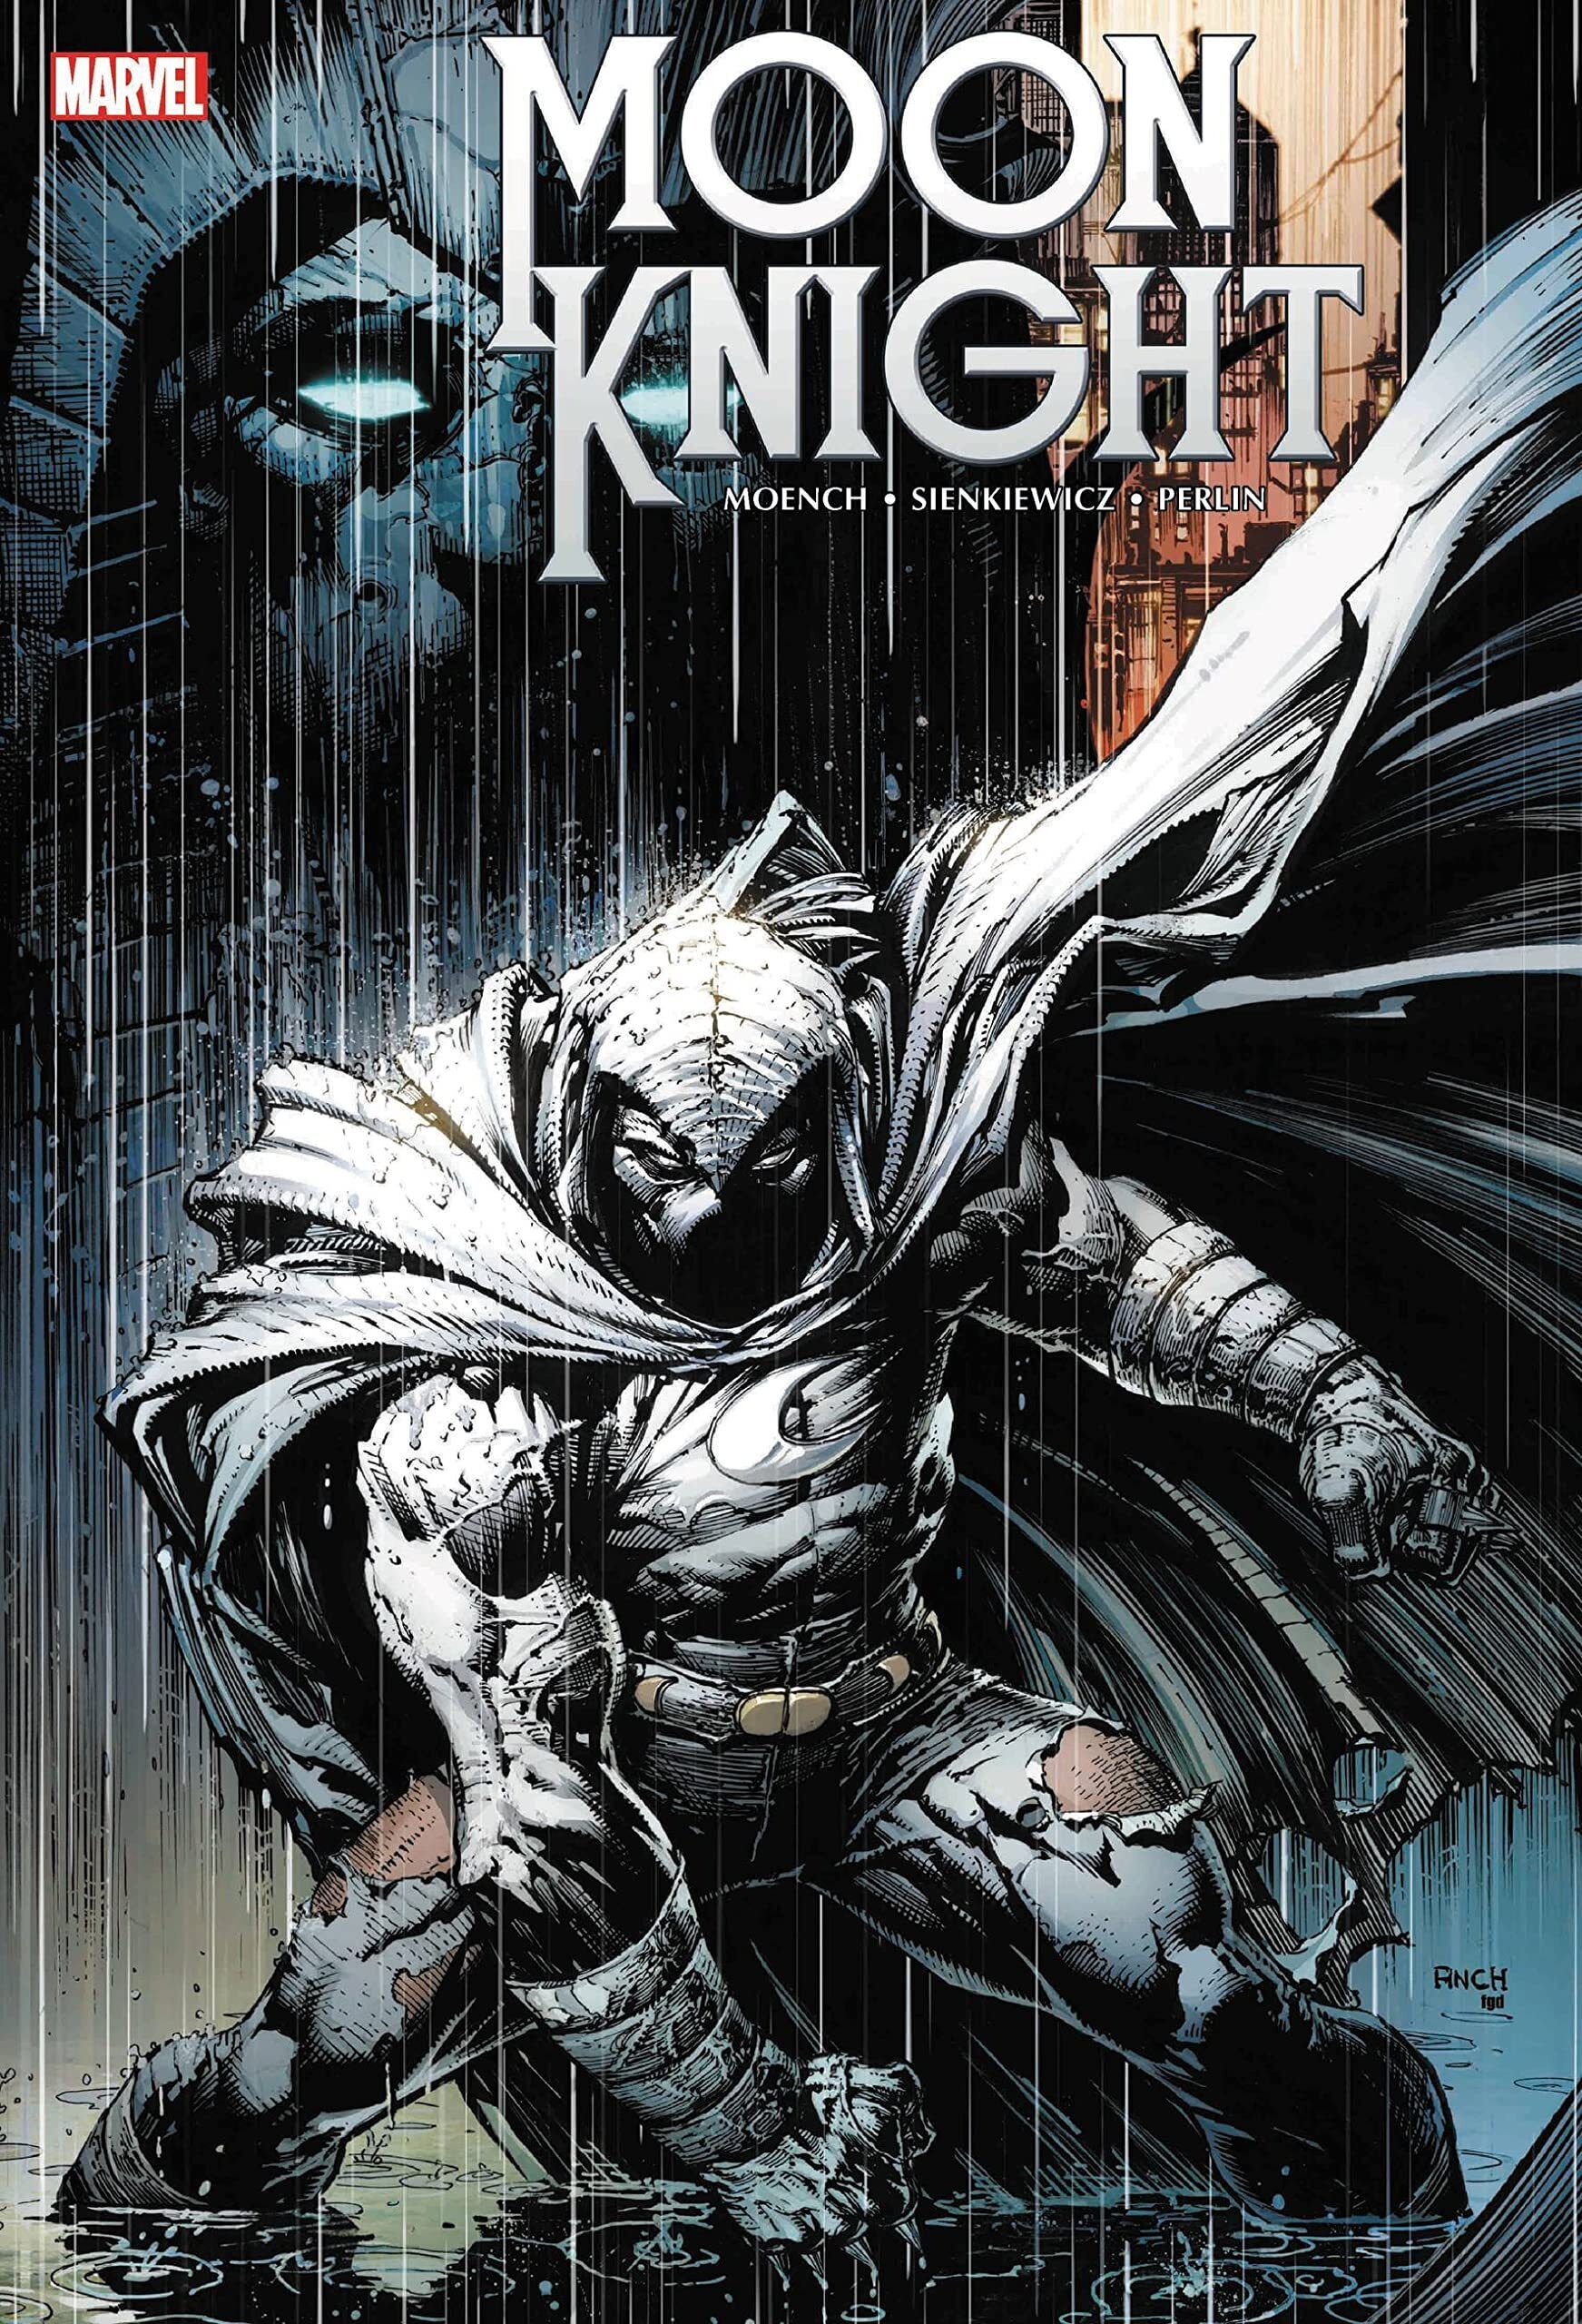 Moon Knight: Best Marvel Comics to Read